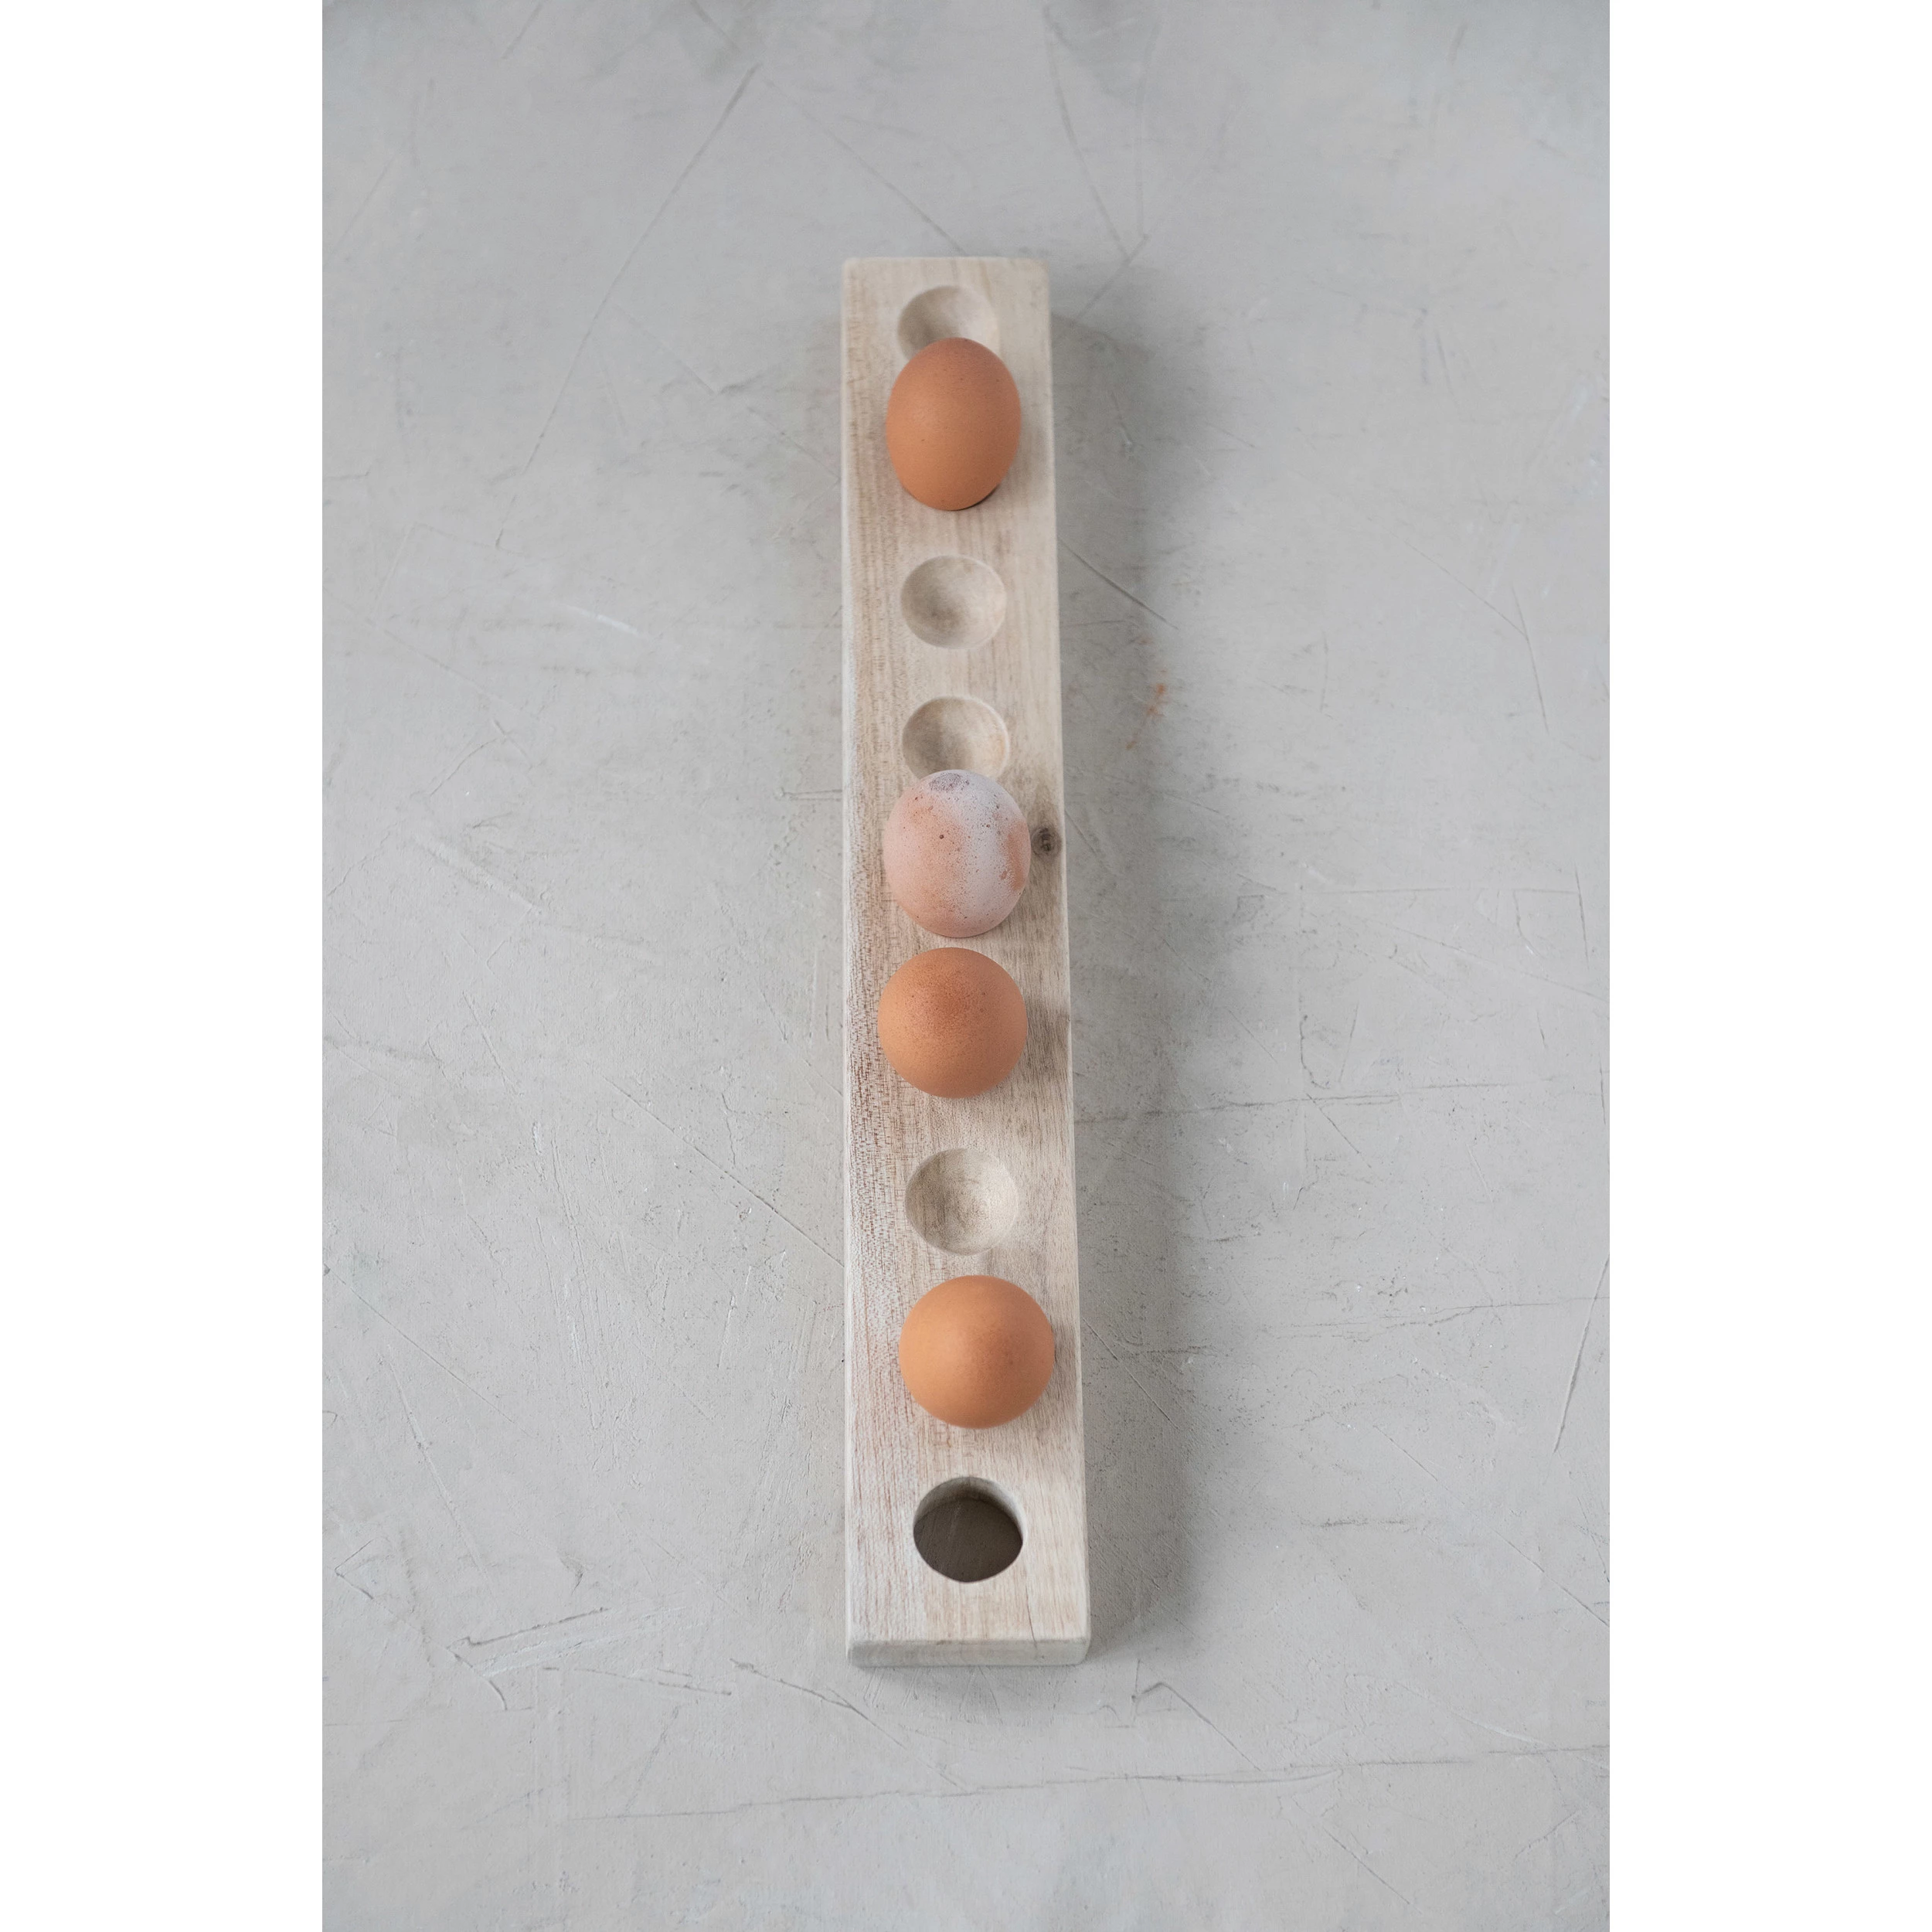 Mango Wood Egg Holder with Handle, Holds 8 Eggs